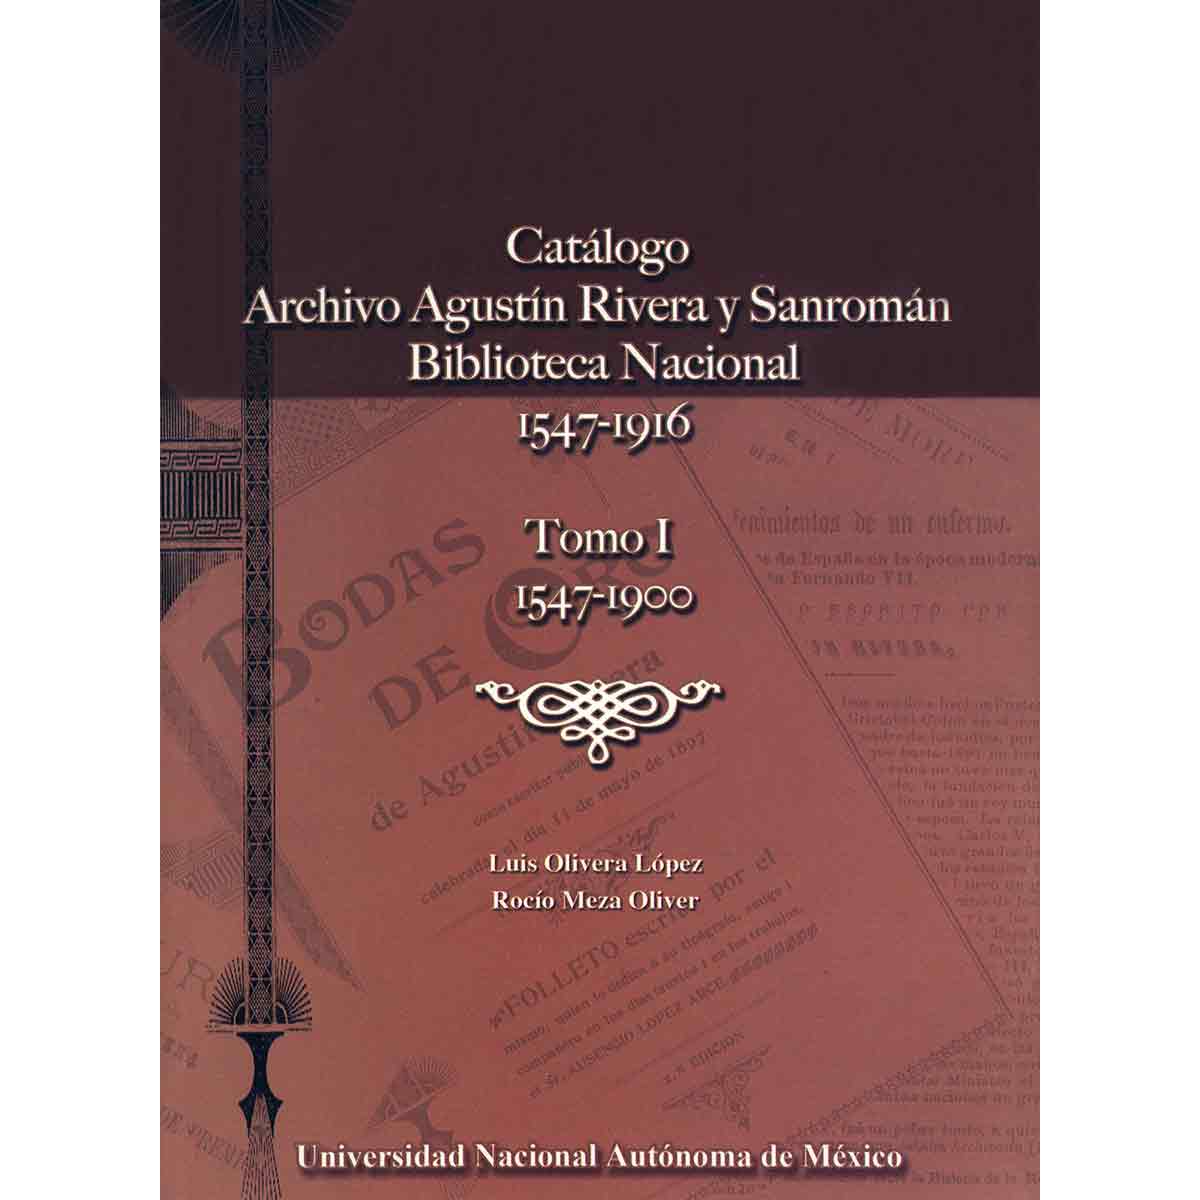 CATÁLOGO. ARCHIVO AGUSTÍN RIVERA Y SANROMÁN. BIBLIOTECA NACIONAL 1547-1916. TOMO I. 1547-1900